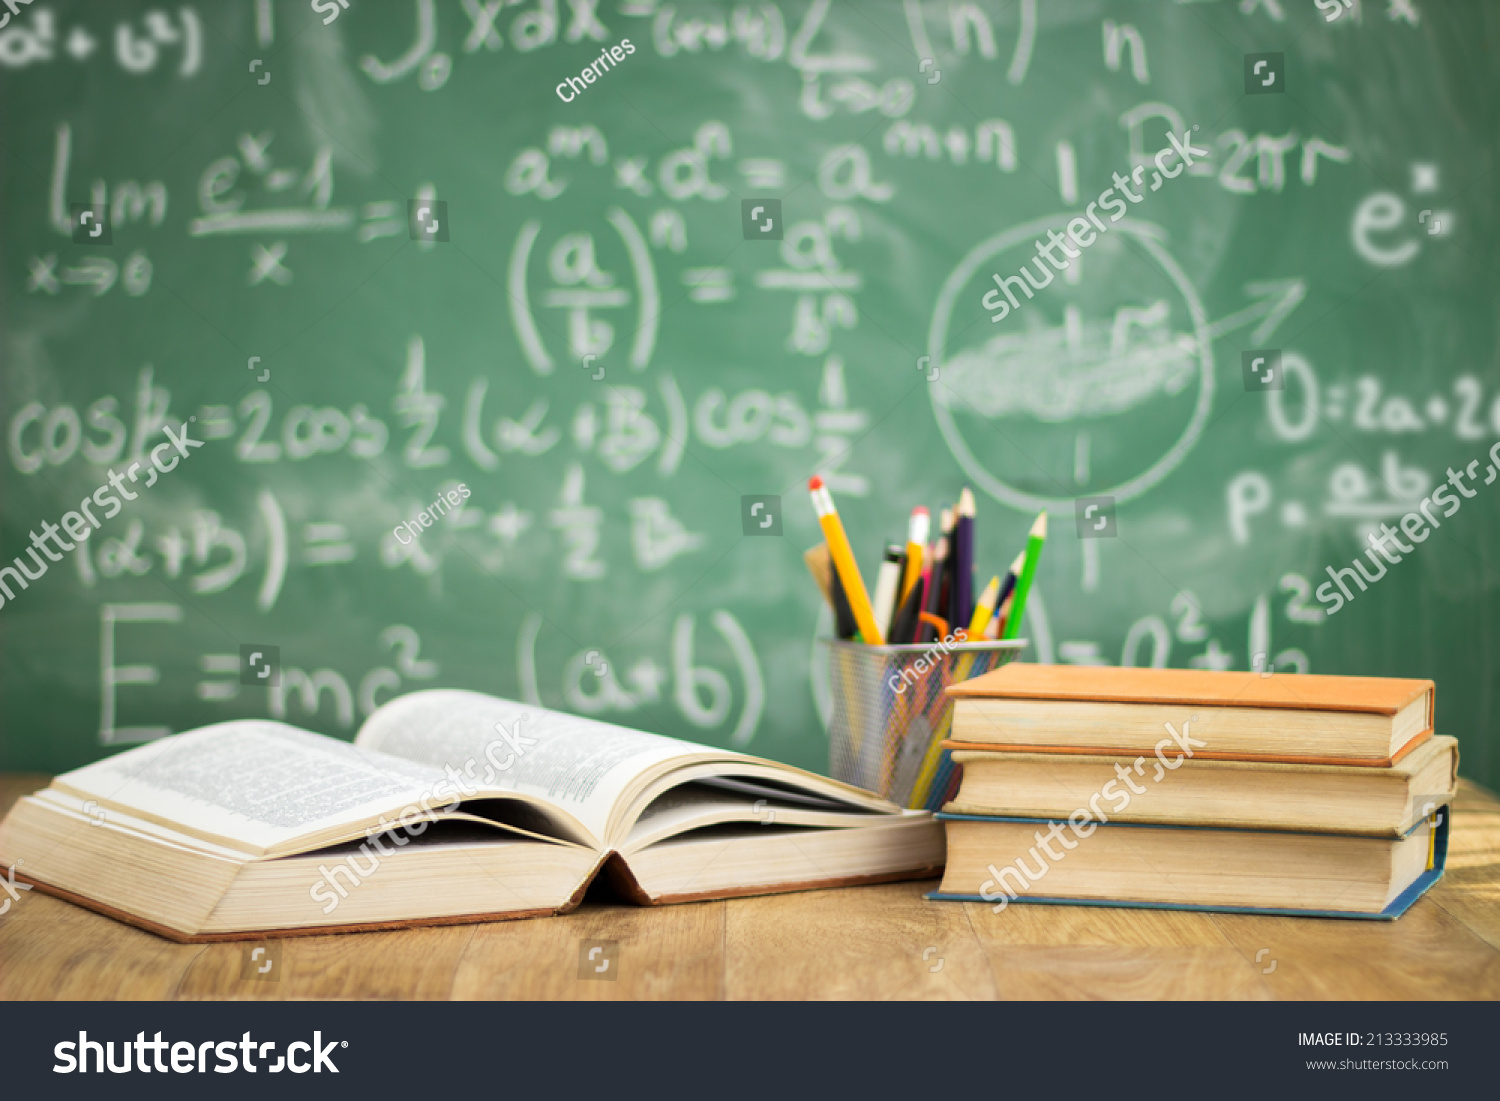 School books on desk, education concept #213333985